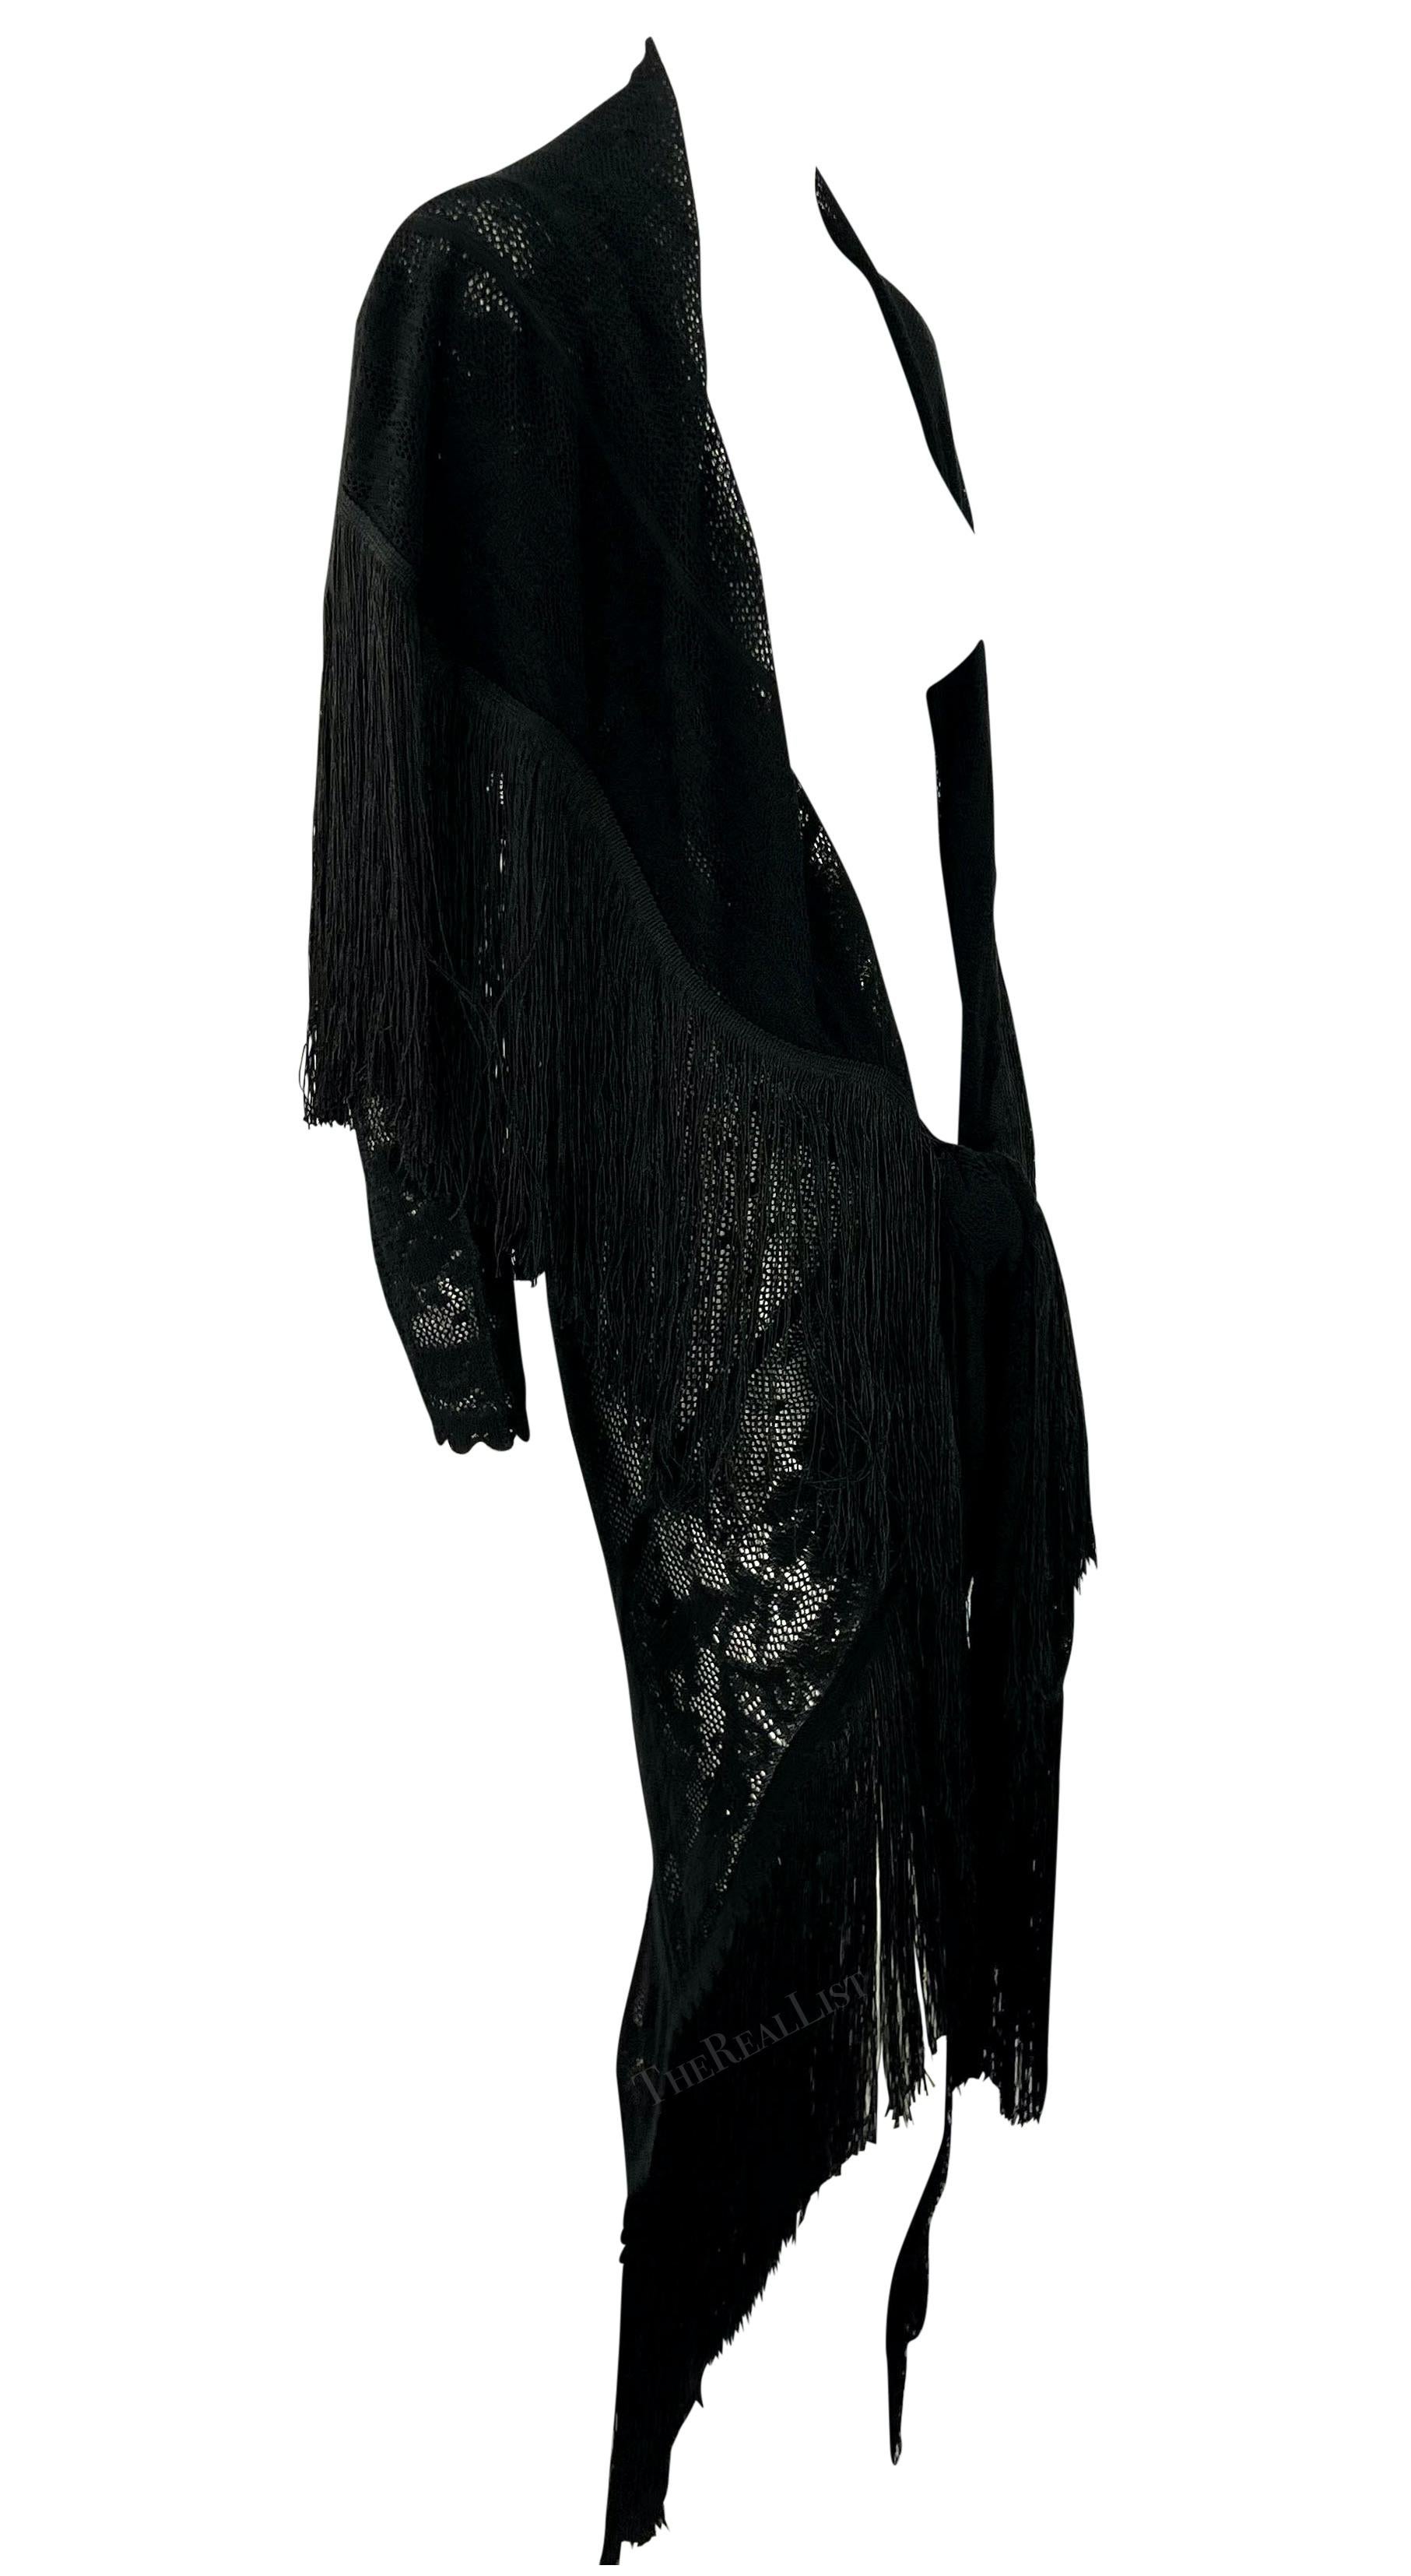 S/S 1997 John Galliano Runway Sheer Black Fringe Lace Flamenco Shawl  For Sale 3